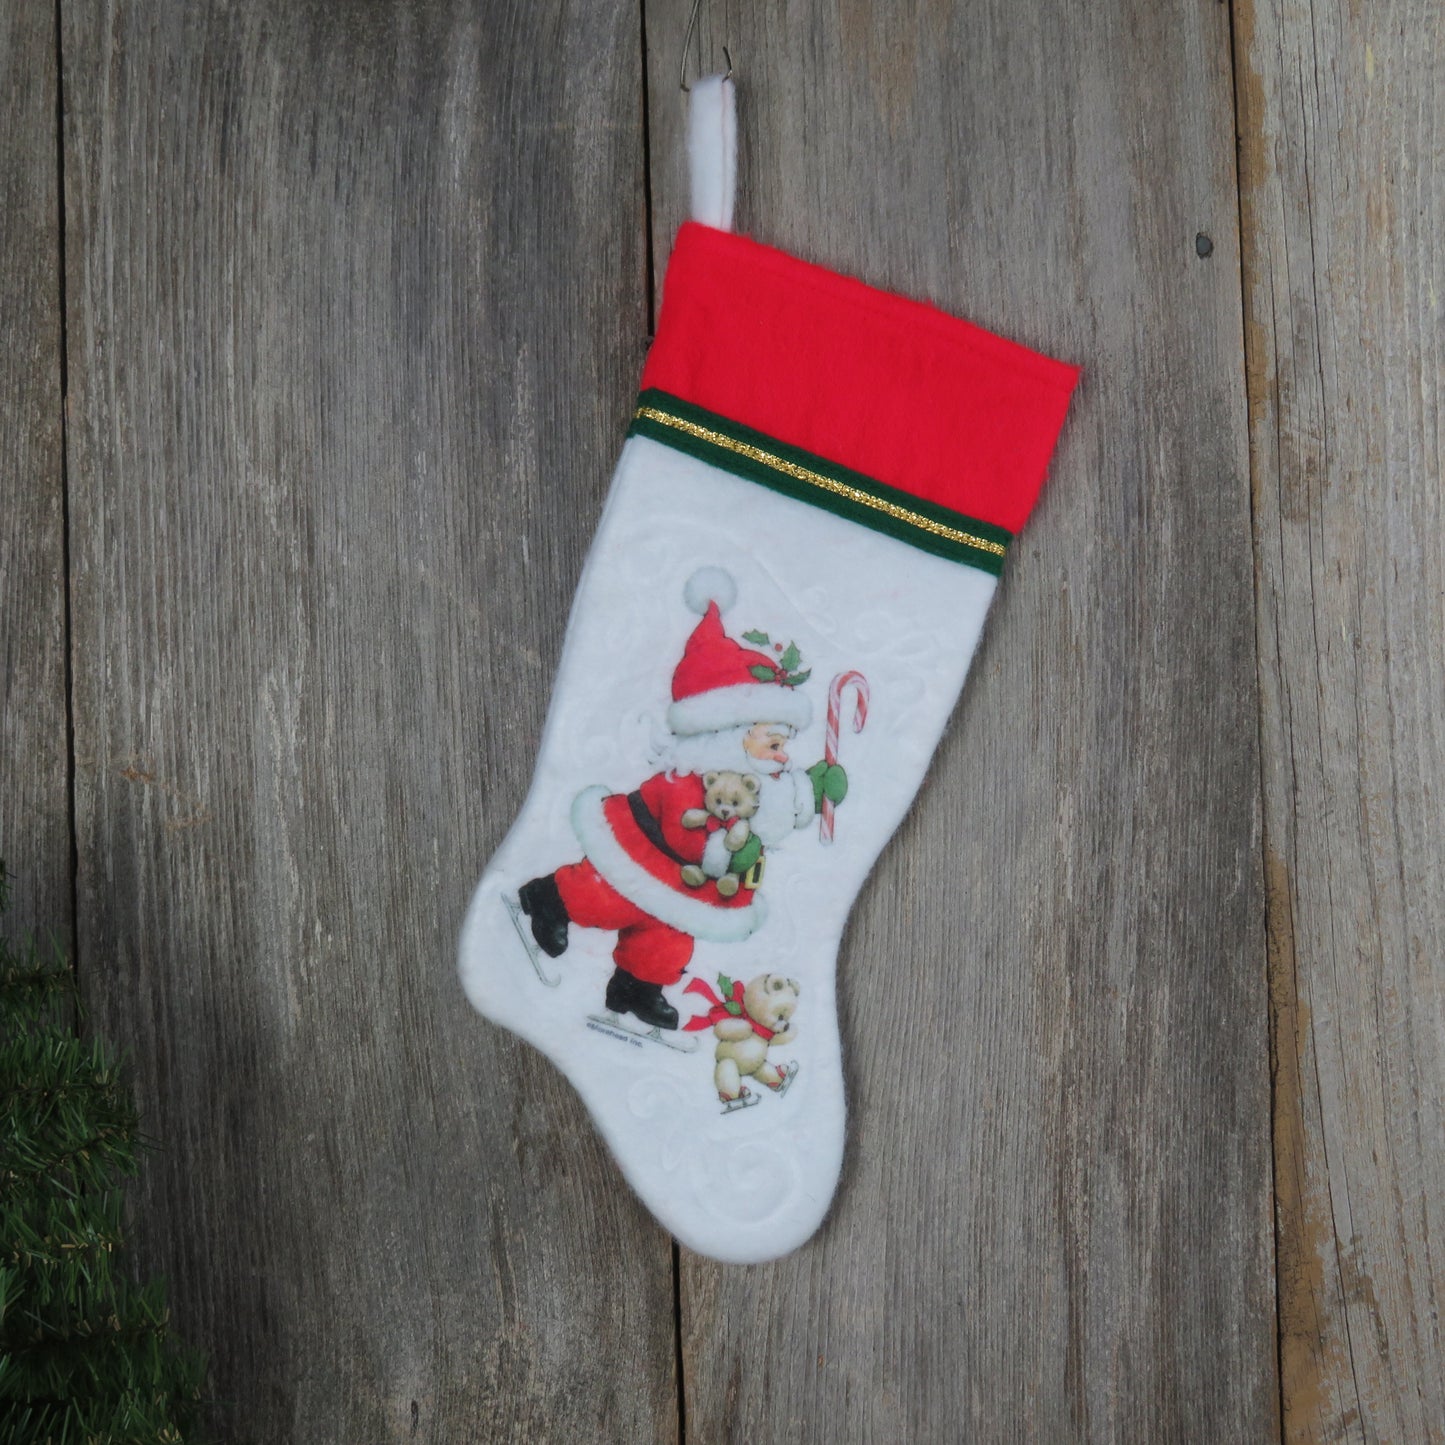 Vintage Santa Morehead Christmas Stocking Felt Fuzzy Teddy Bear Candy Cane White Fleece Holiday Decor